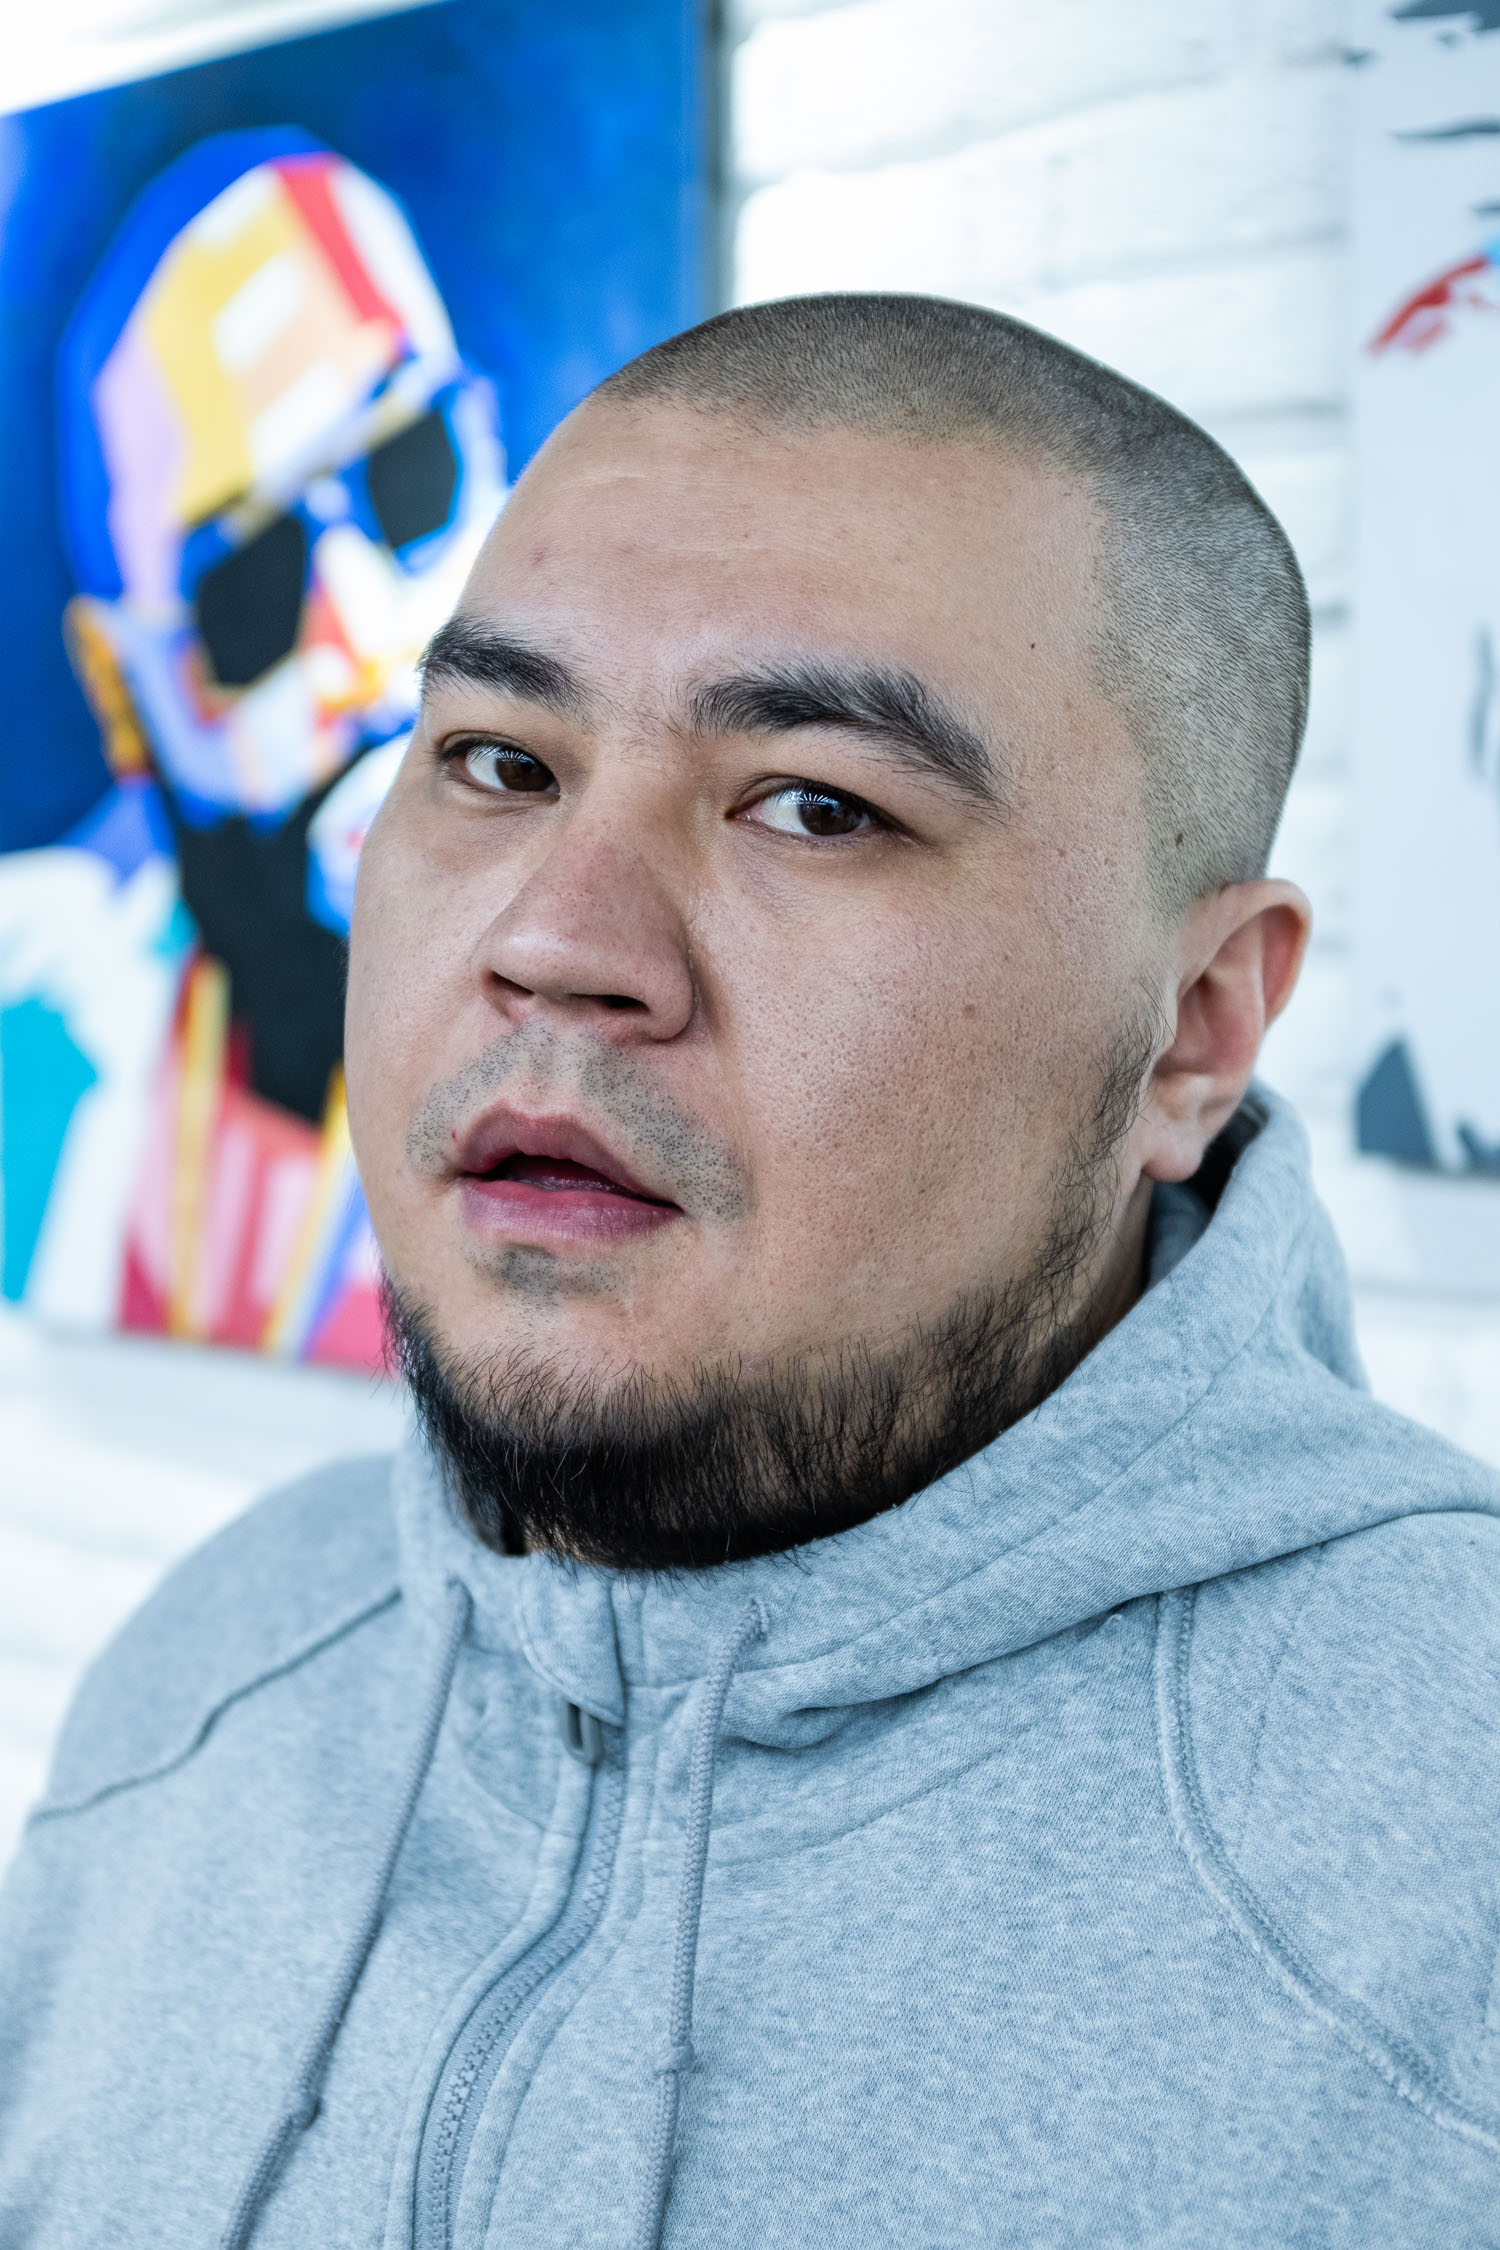 Rashid Sarbagyshev is one of the “dinosaurs" of the Bishkek rap scene